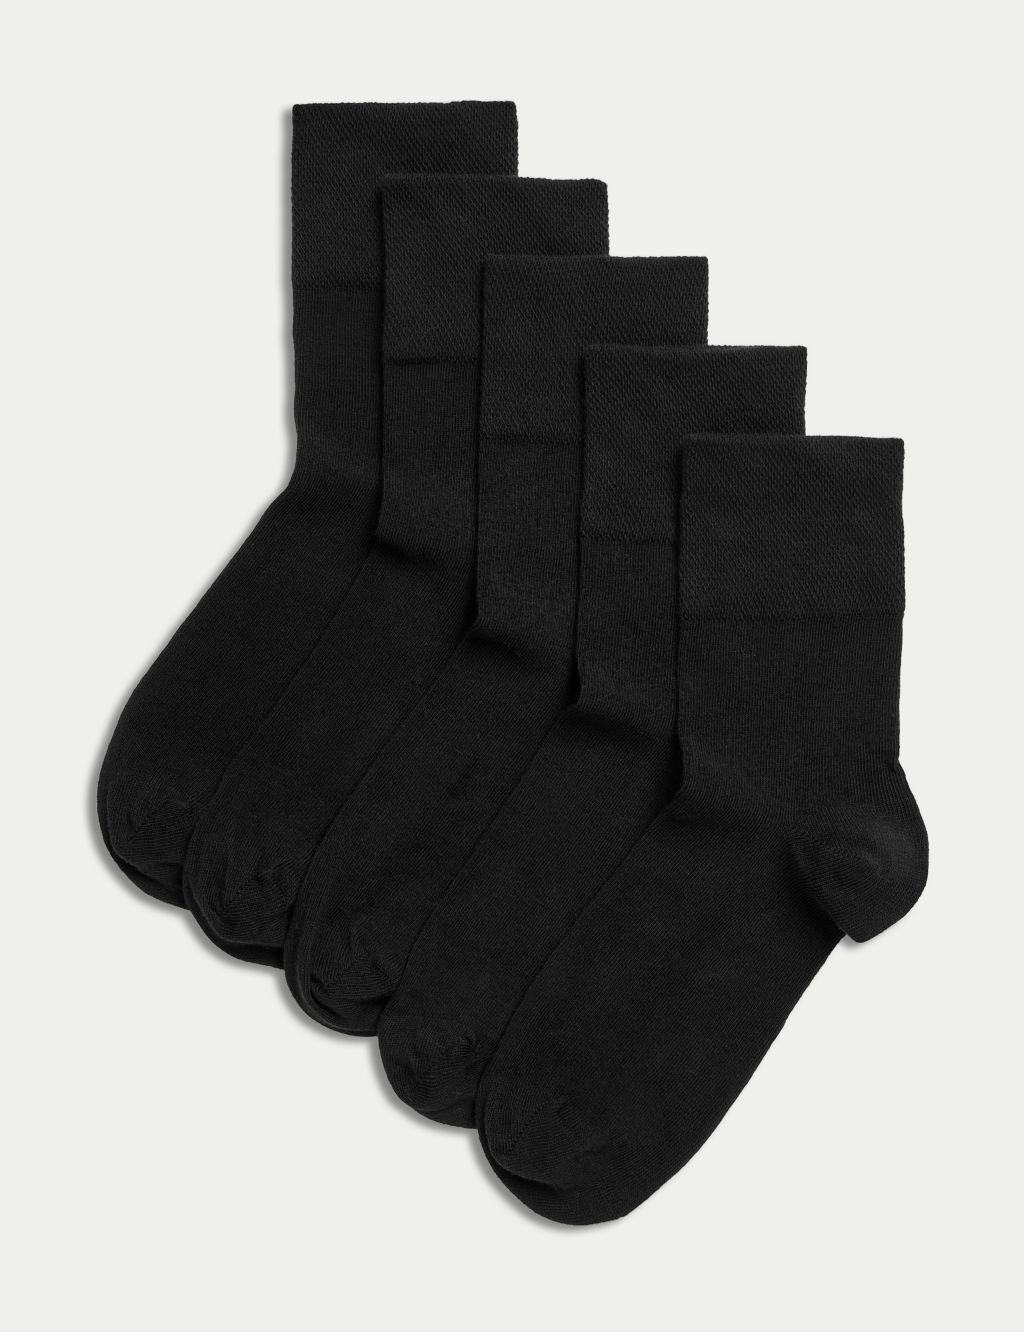 5pk Cotton Rich Ankle High Socks image 1